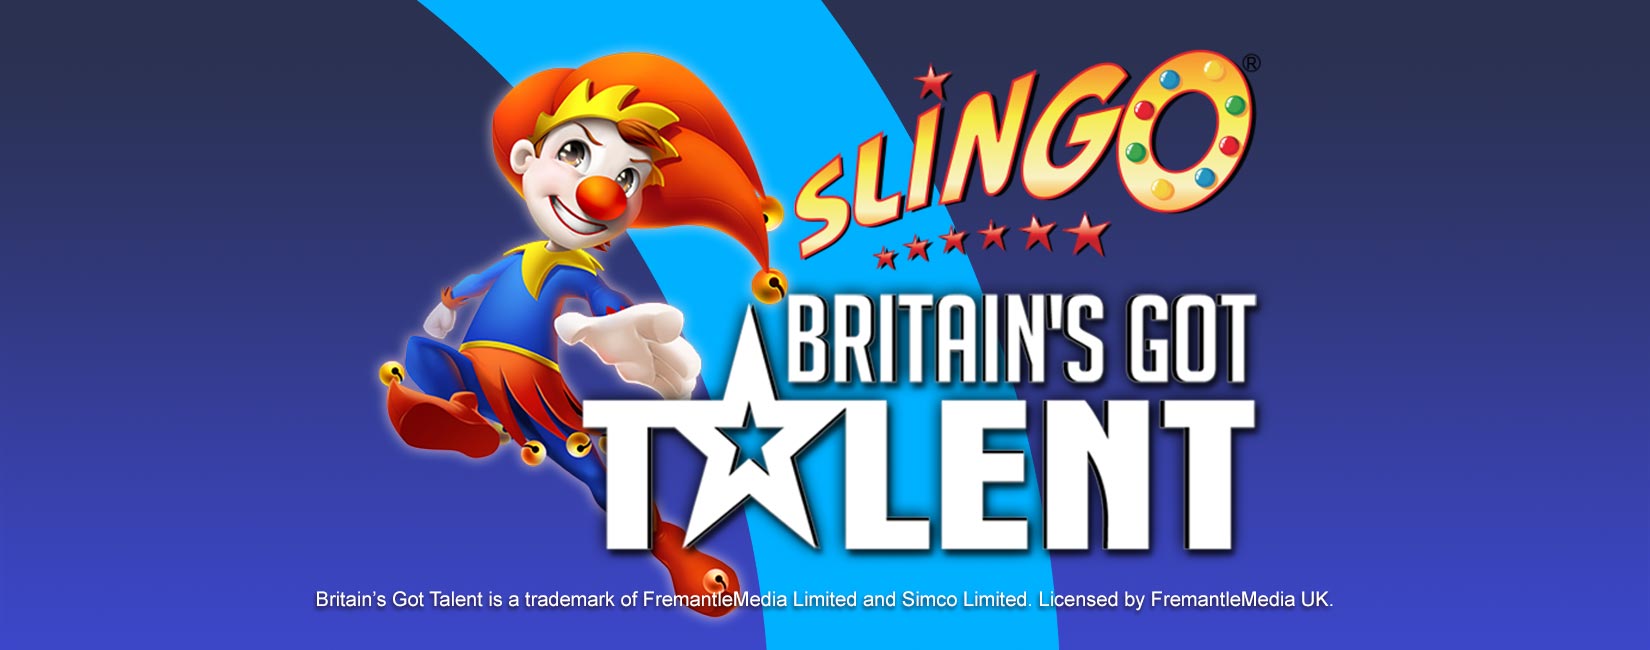 CRE281244December ReviewsDigital Design Task 1 Slingo Britains Got TalentGSsitecore1650x650